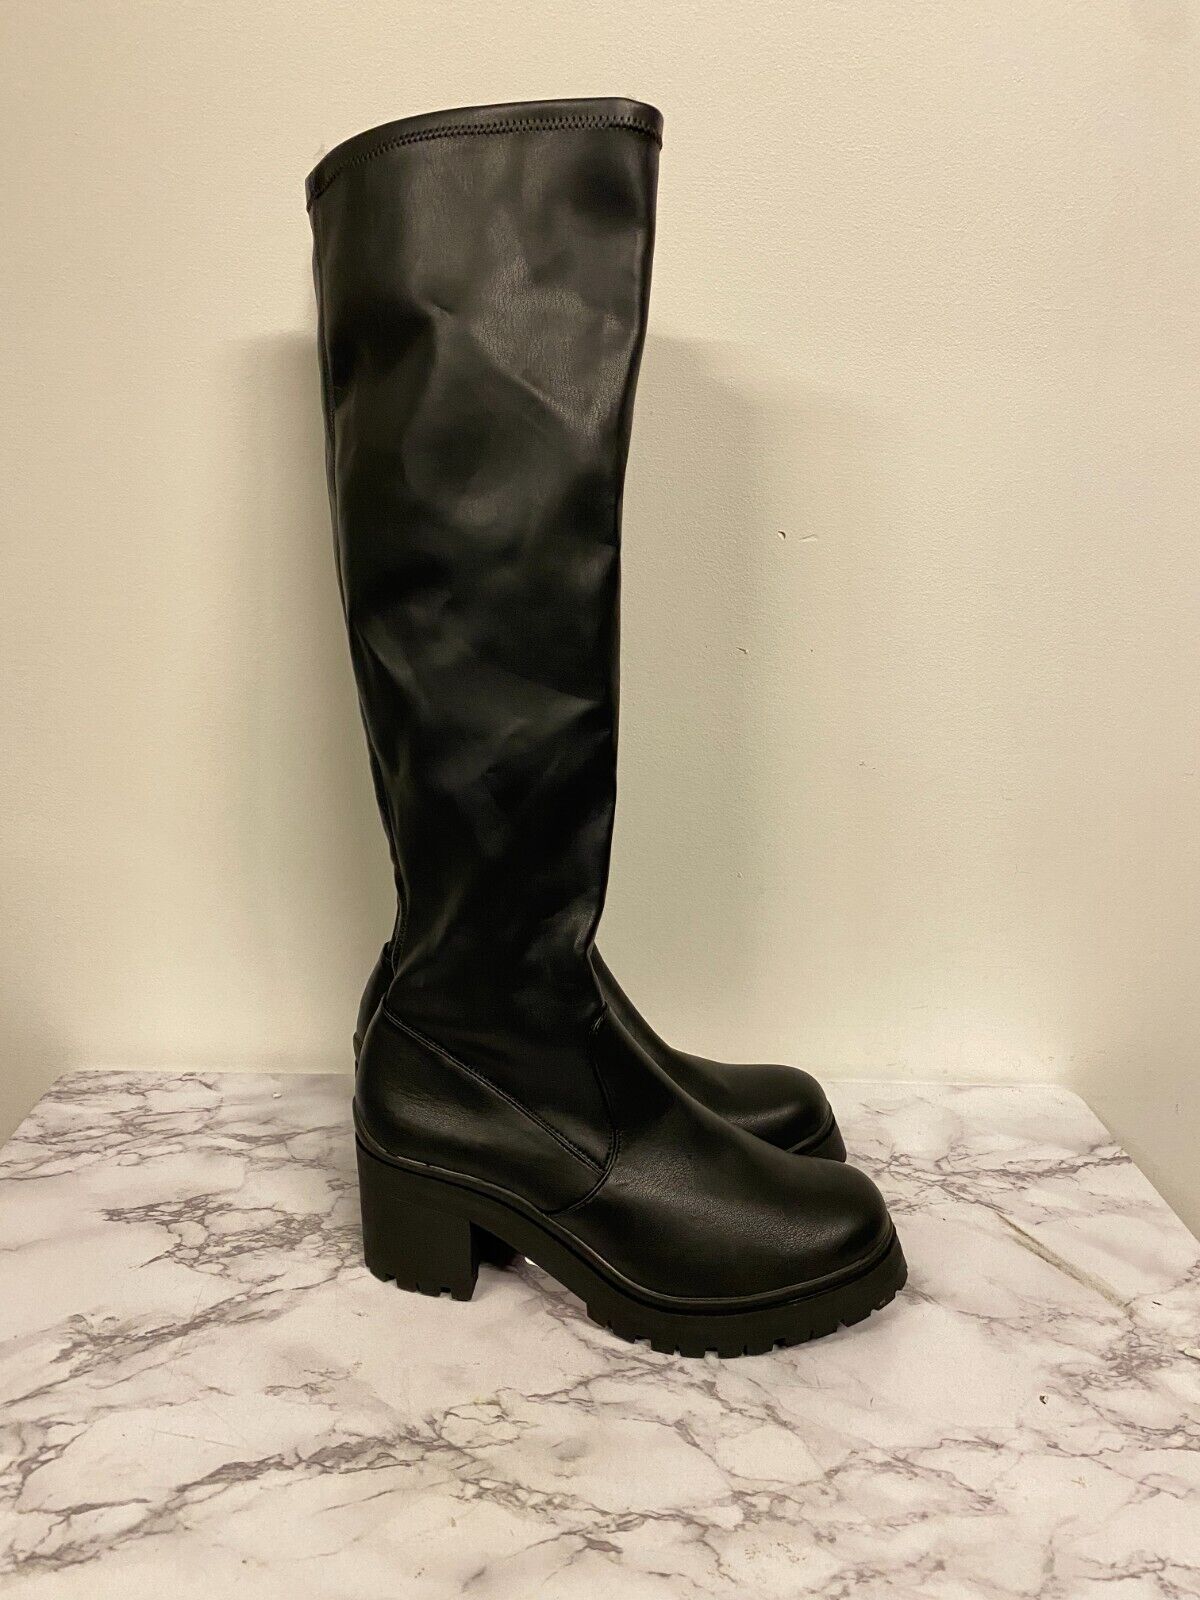 Madden Girl black womens Over the knee tall boots sz 11 | eBay